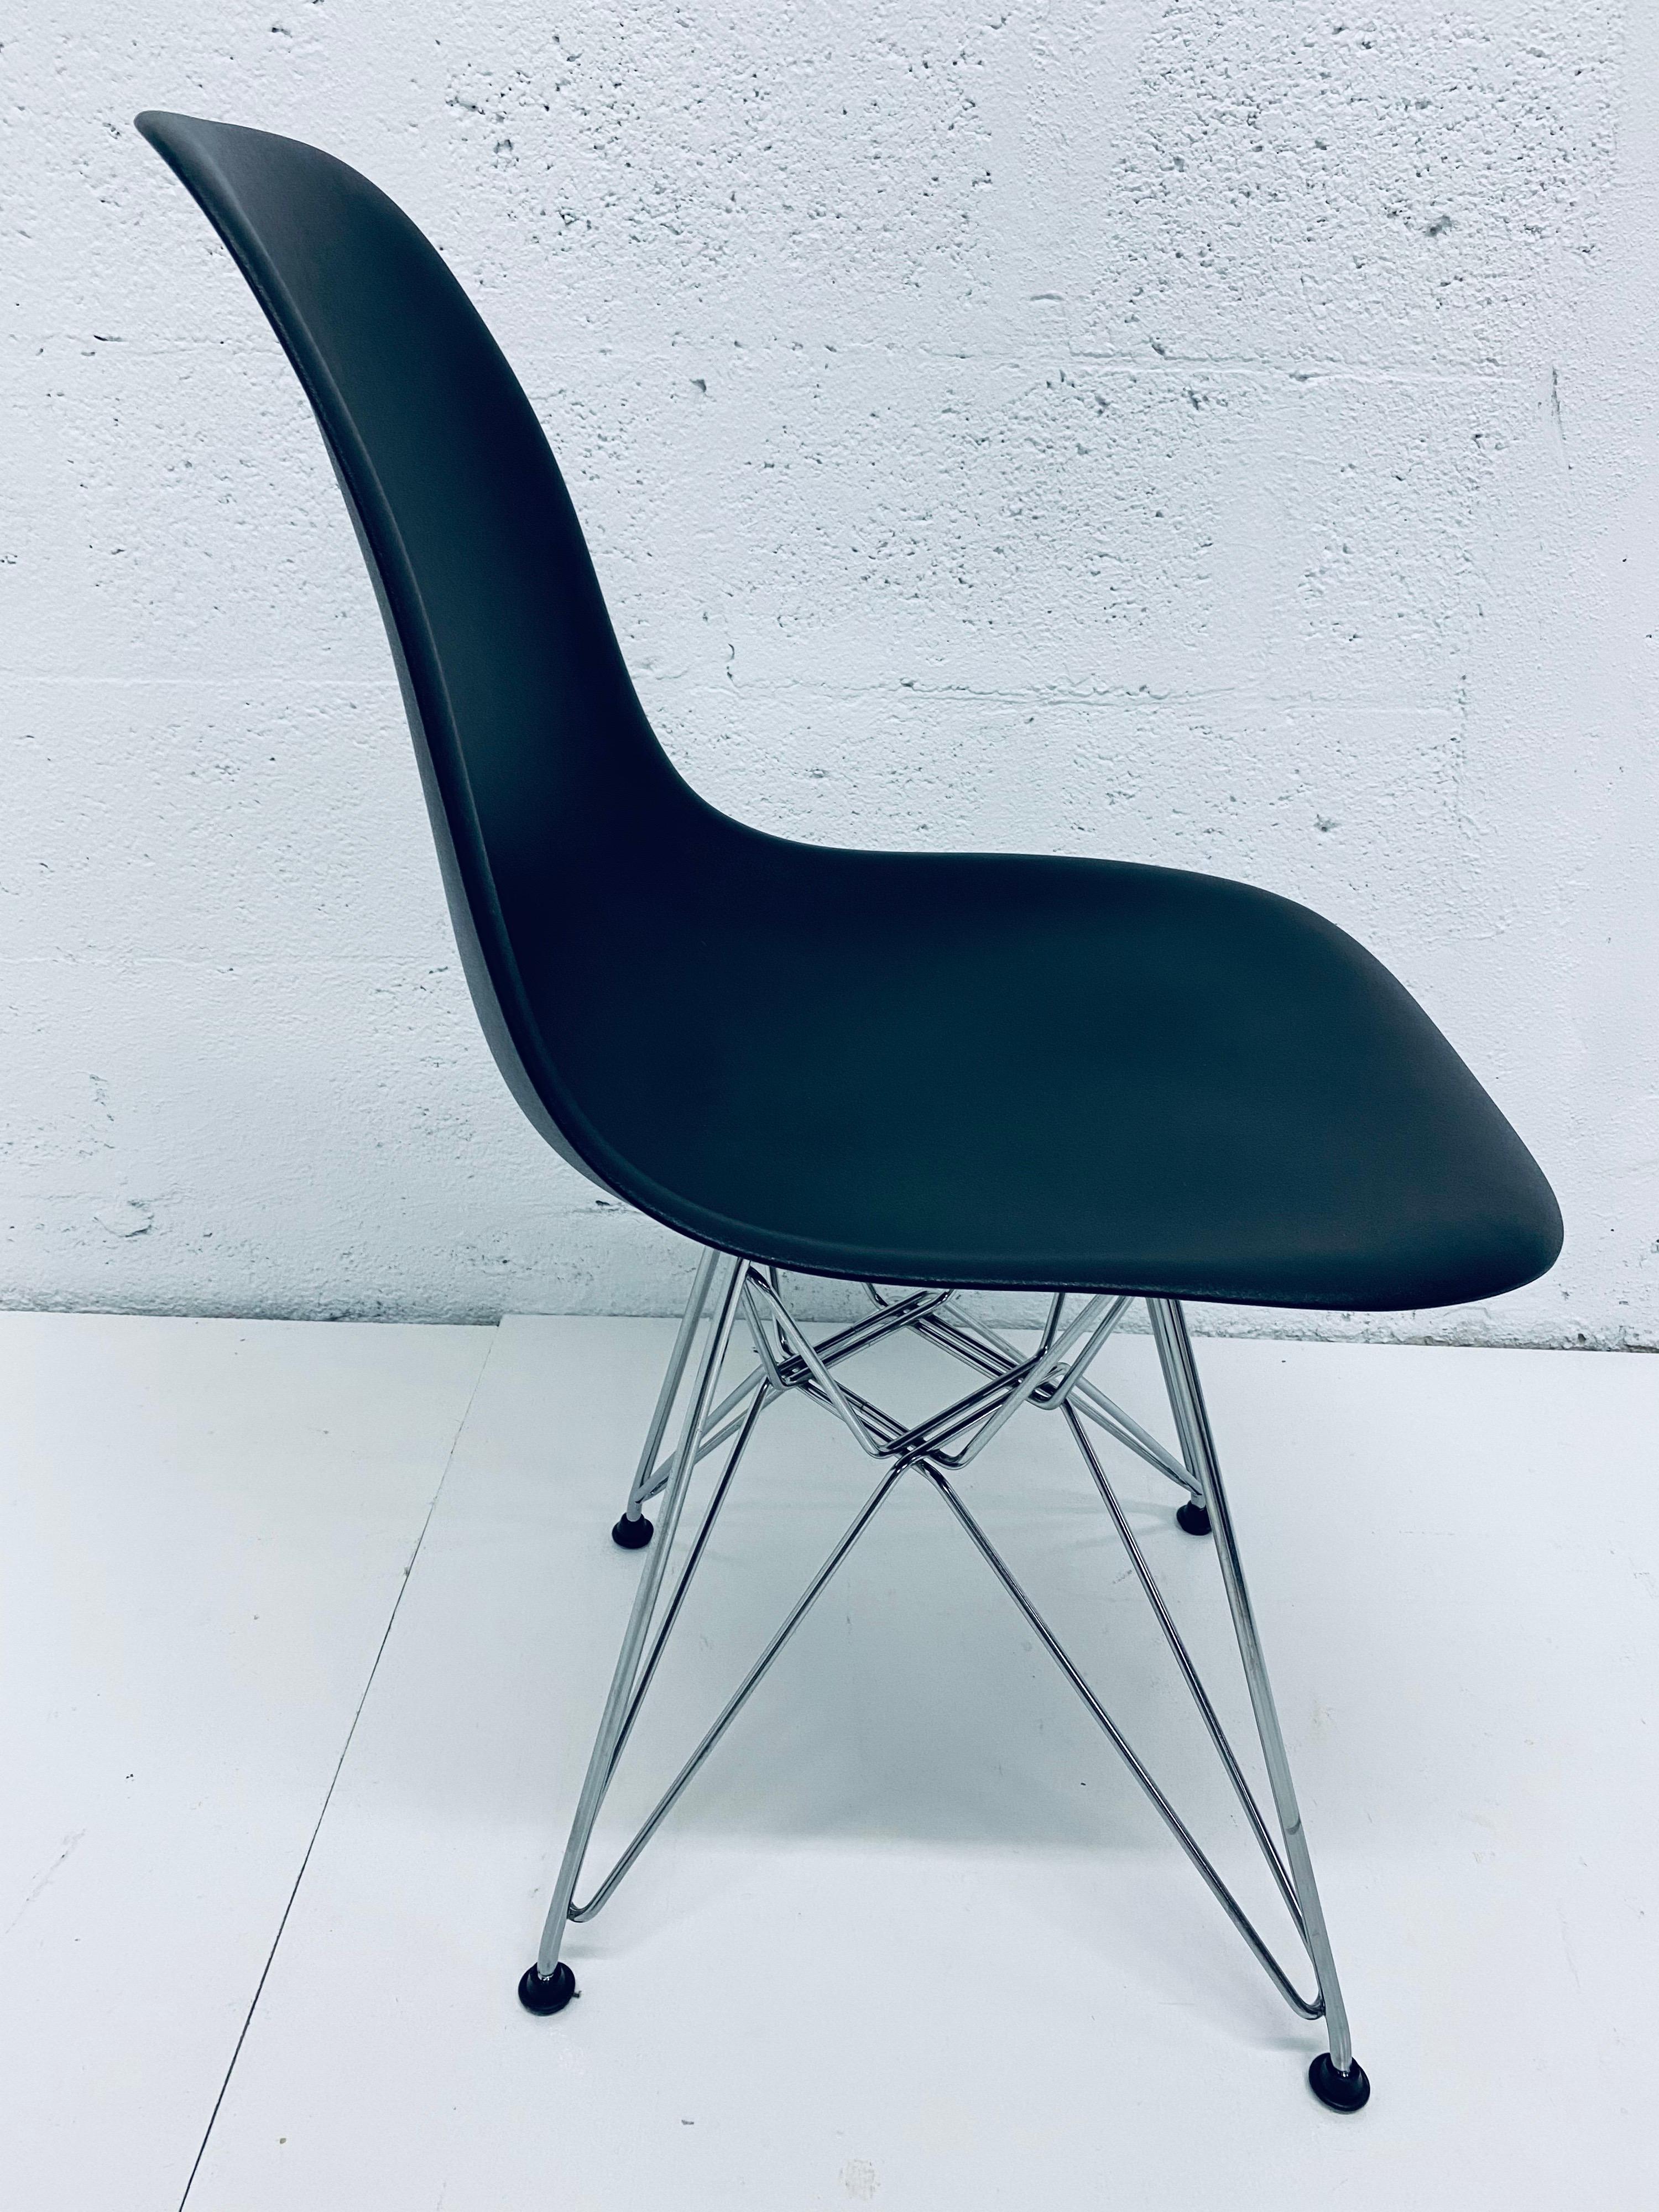 Pair of Eames Black Molded Plastic Side Chair for Herman Miller 2